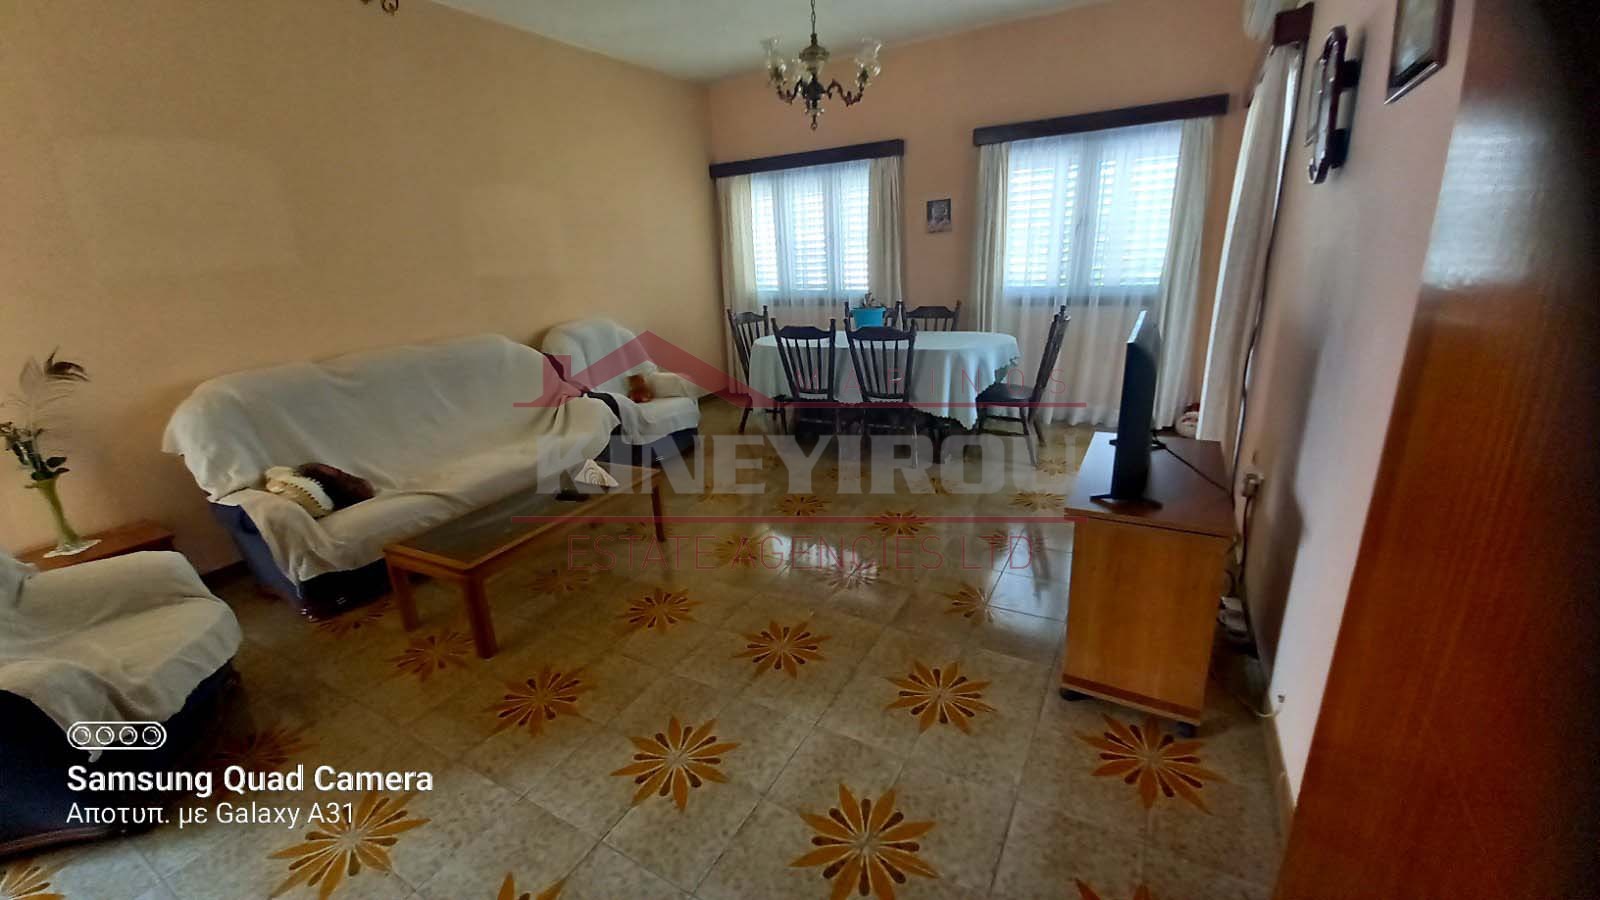 Upper House of 3 bedroom, Fully Furnished in Faneromeni, Larnaca.